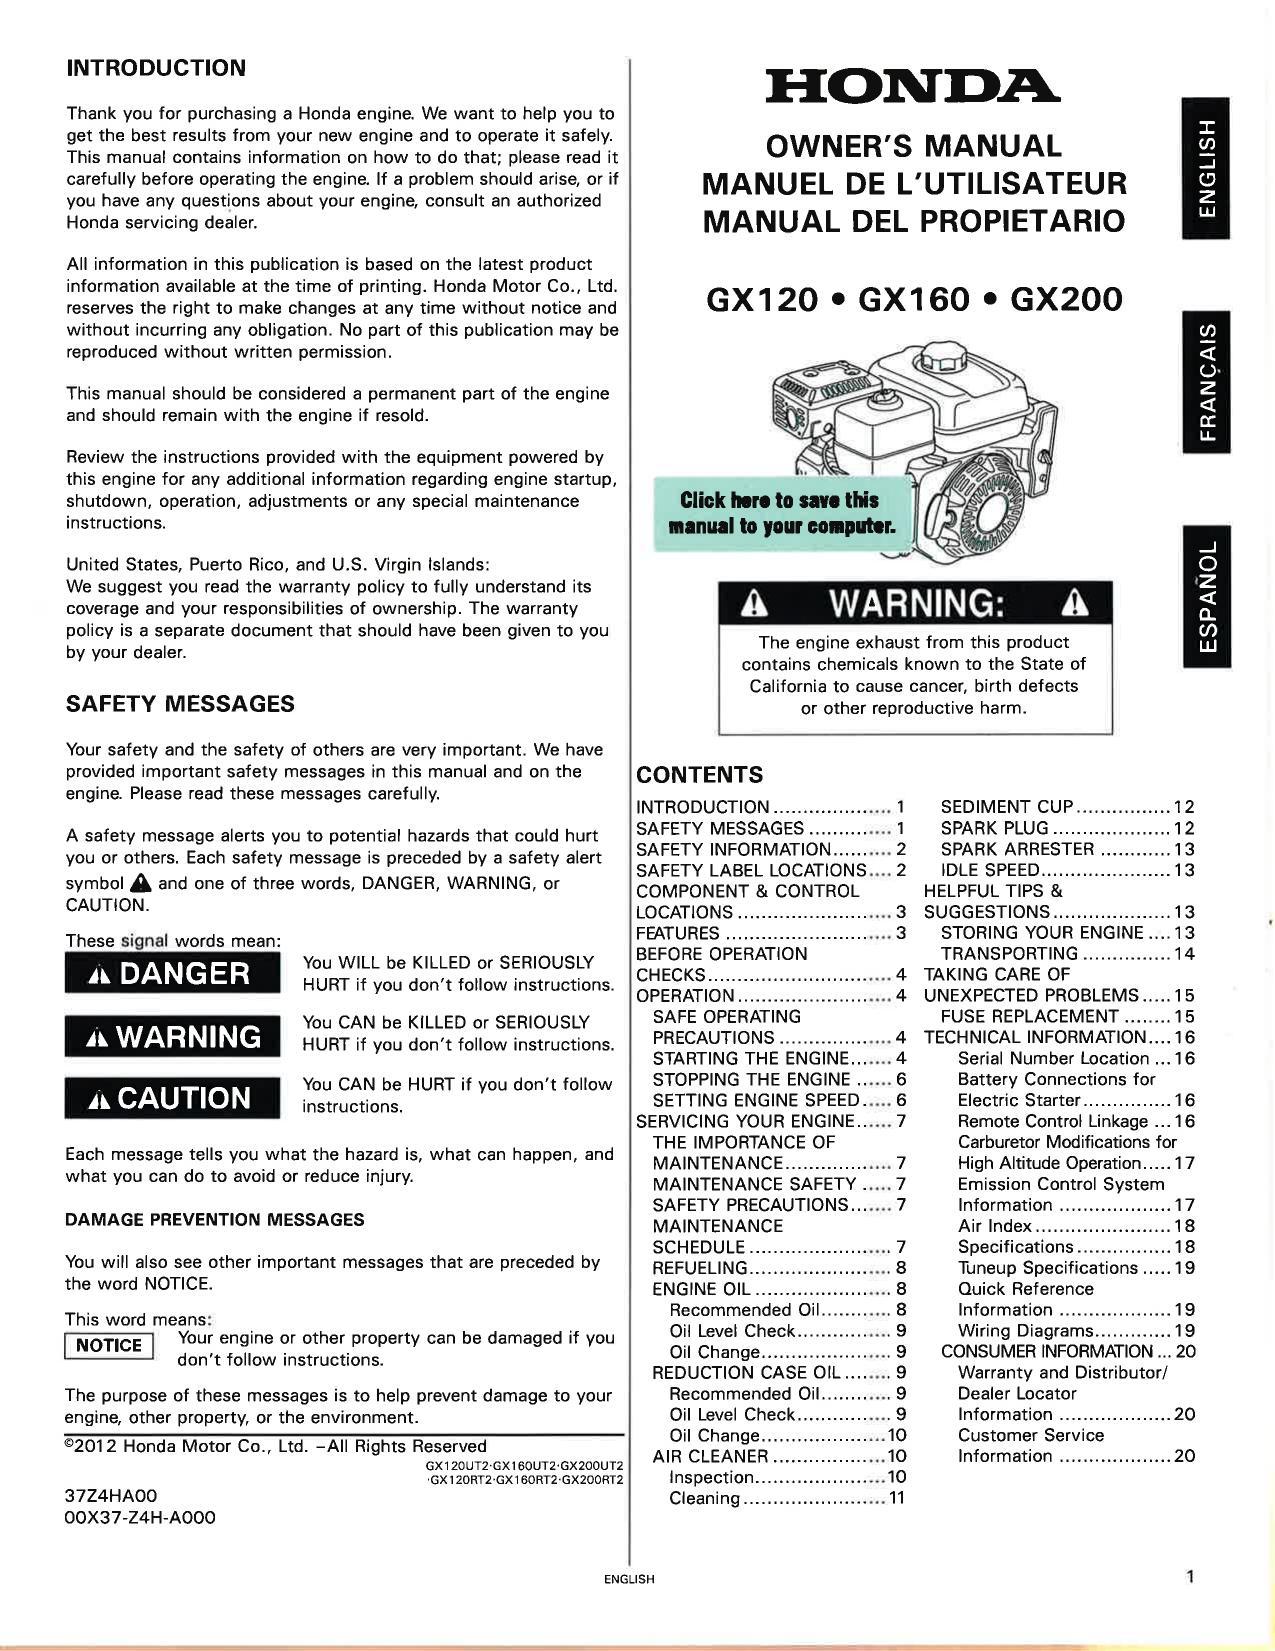 honda-owners-manual-for-gx120-gx160-and-gx200-engines.pdf